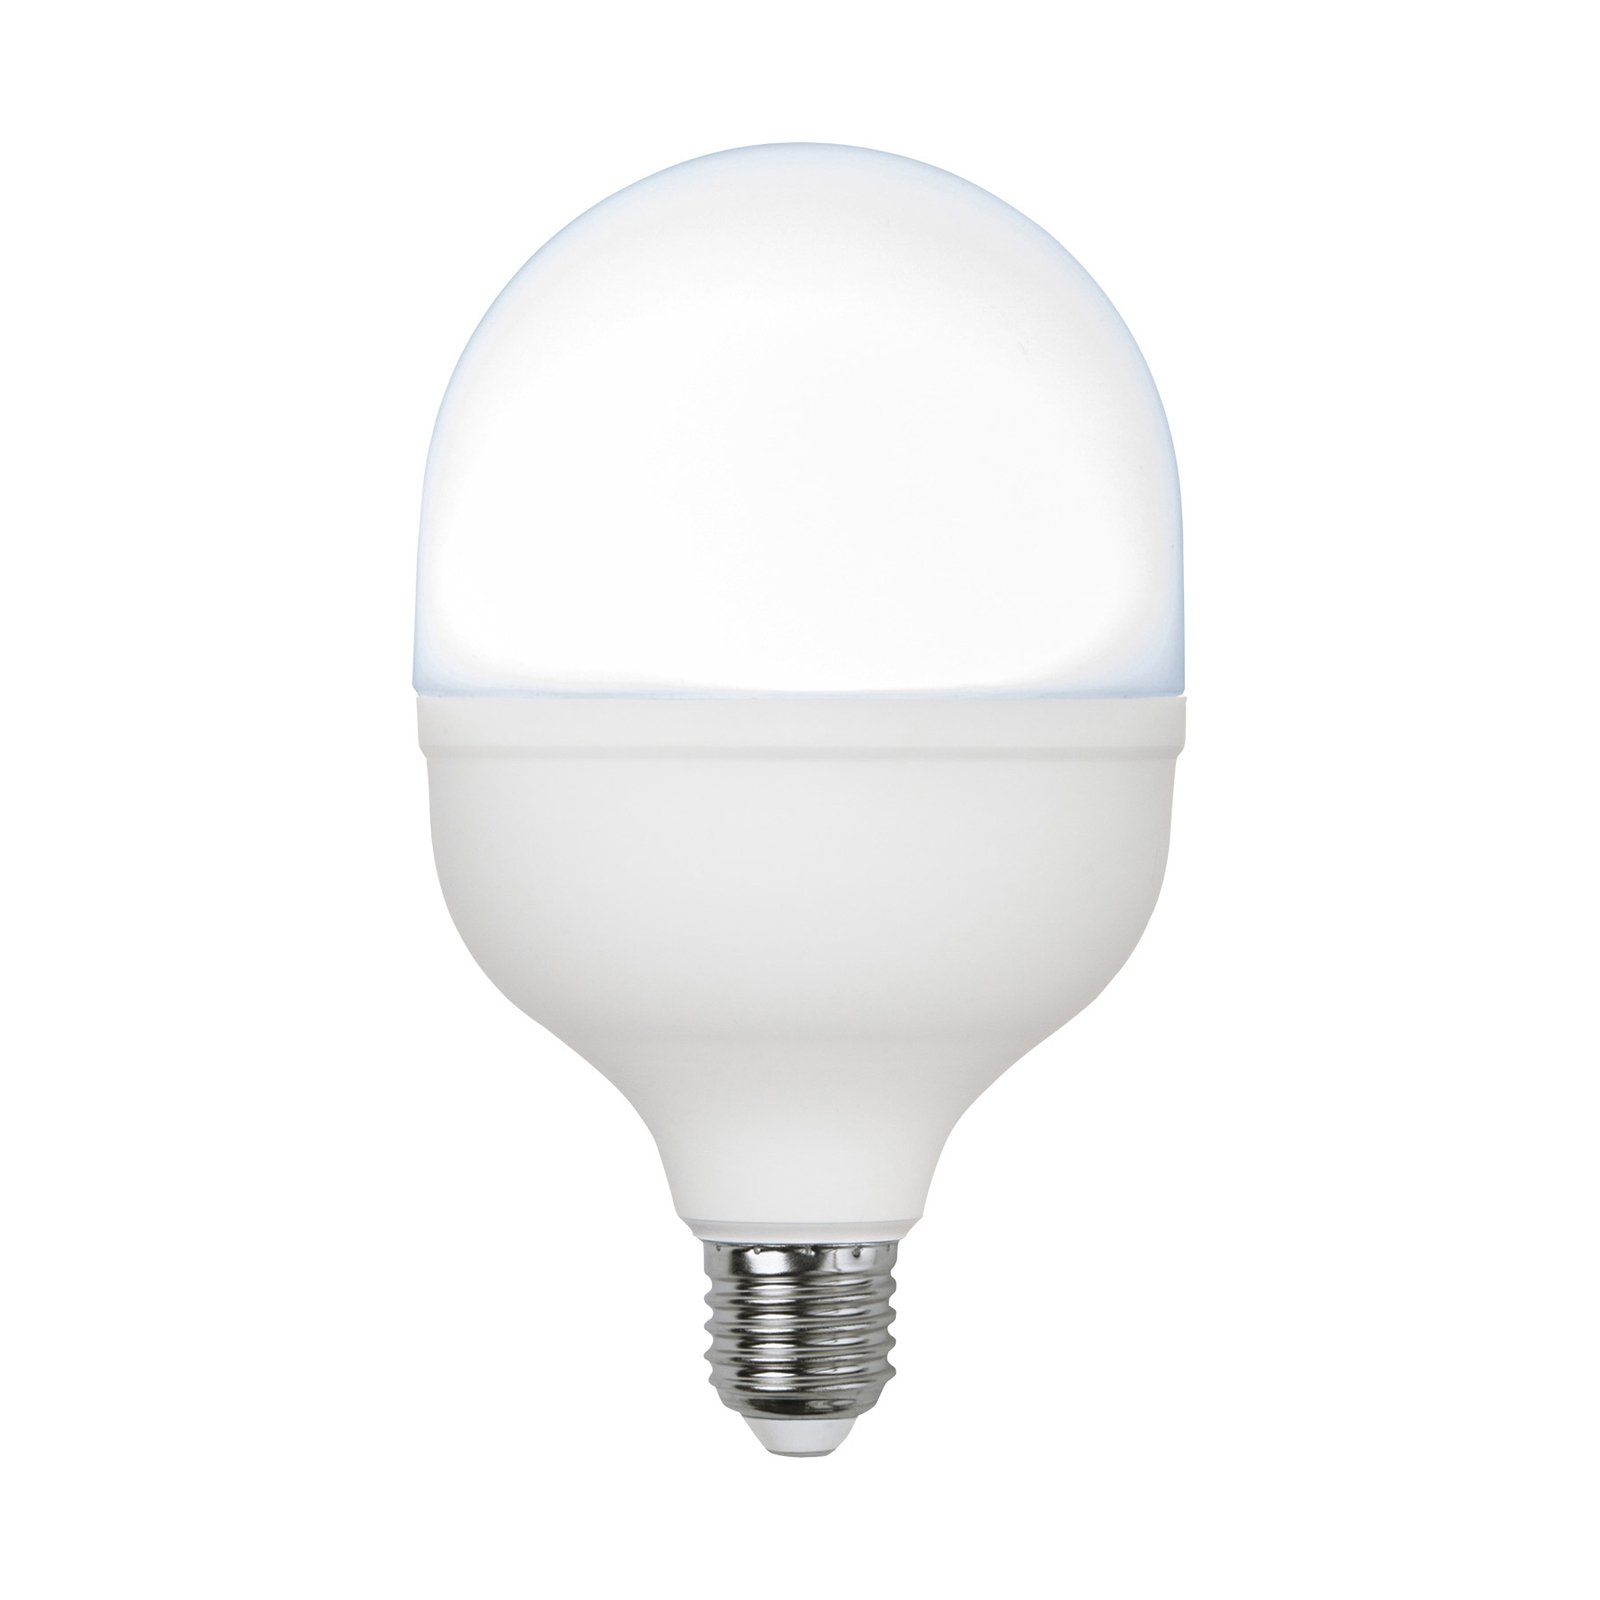 LED bulb E27 30 W 6,500 K 4,000 lumens, round